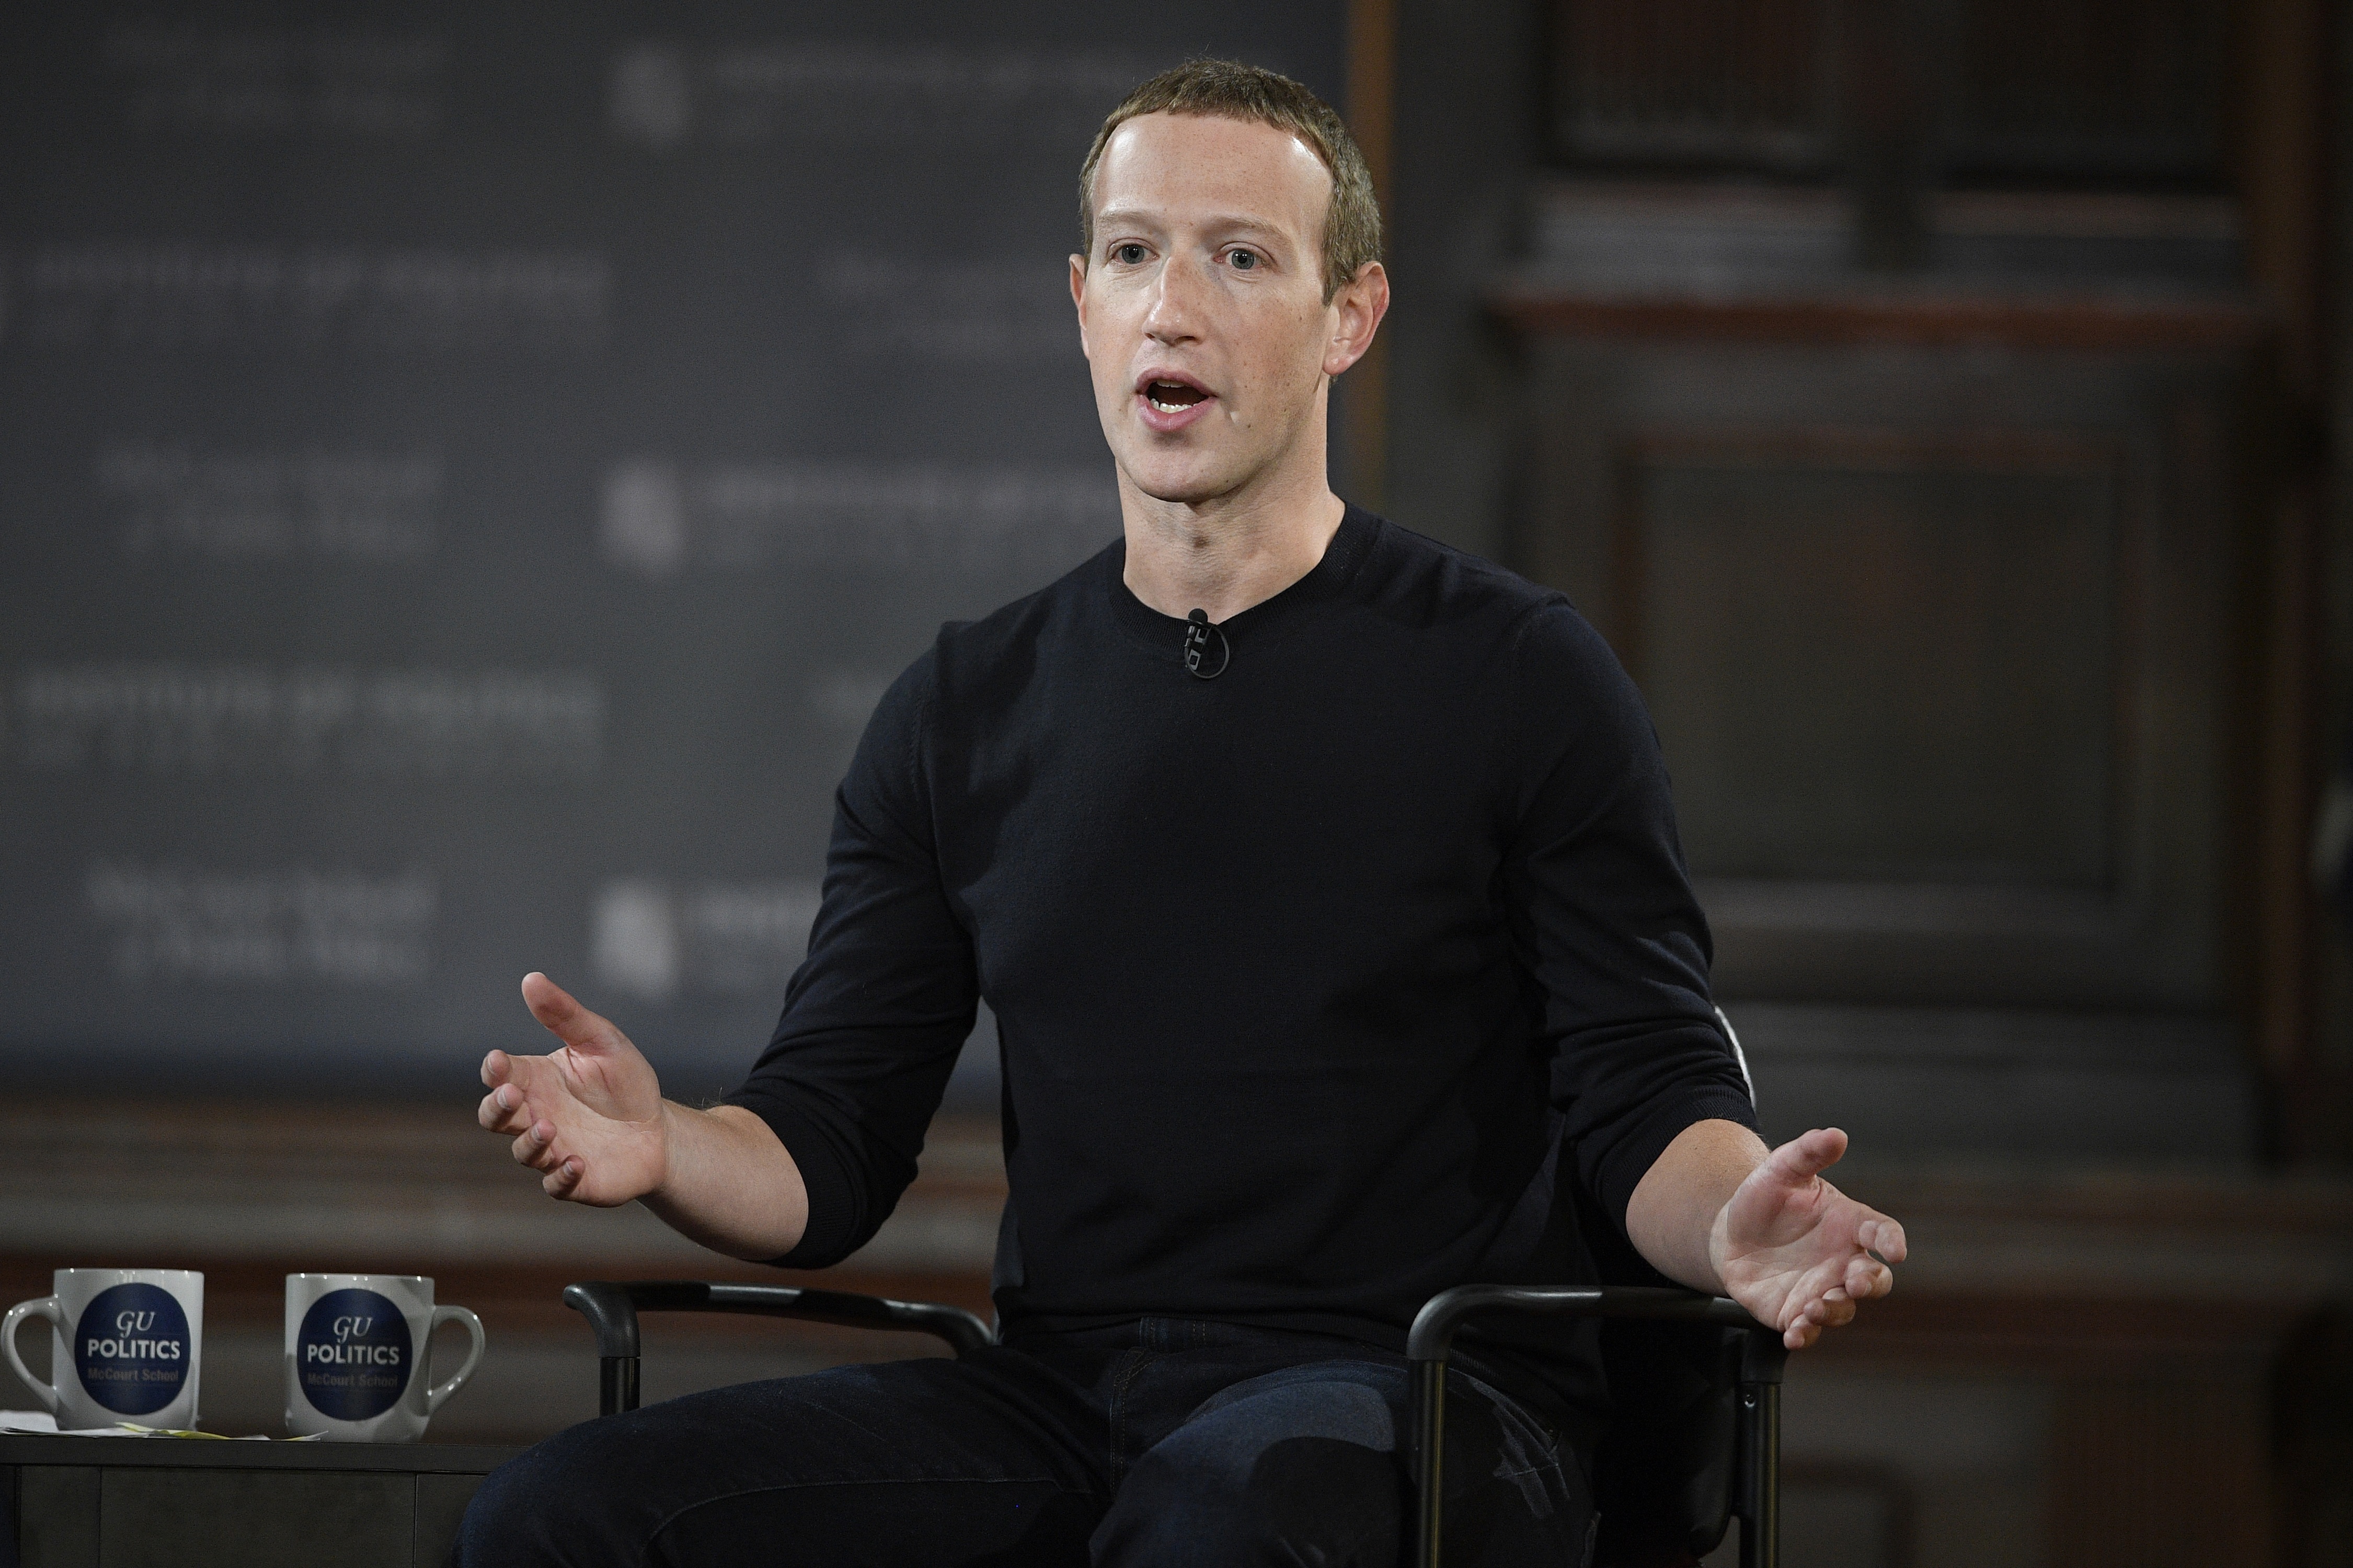 Meta CEO Mark Zuckerberg undergoes knee surgery following injury during martial arts training.